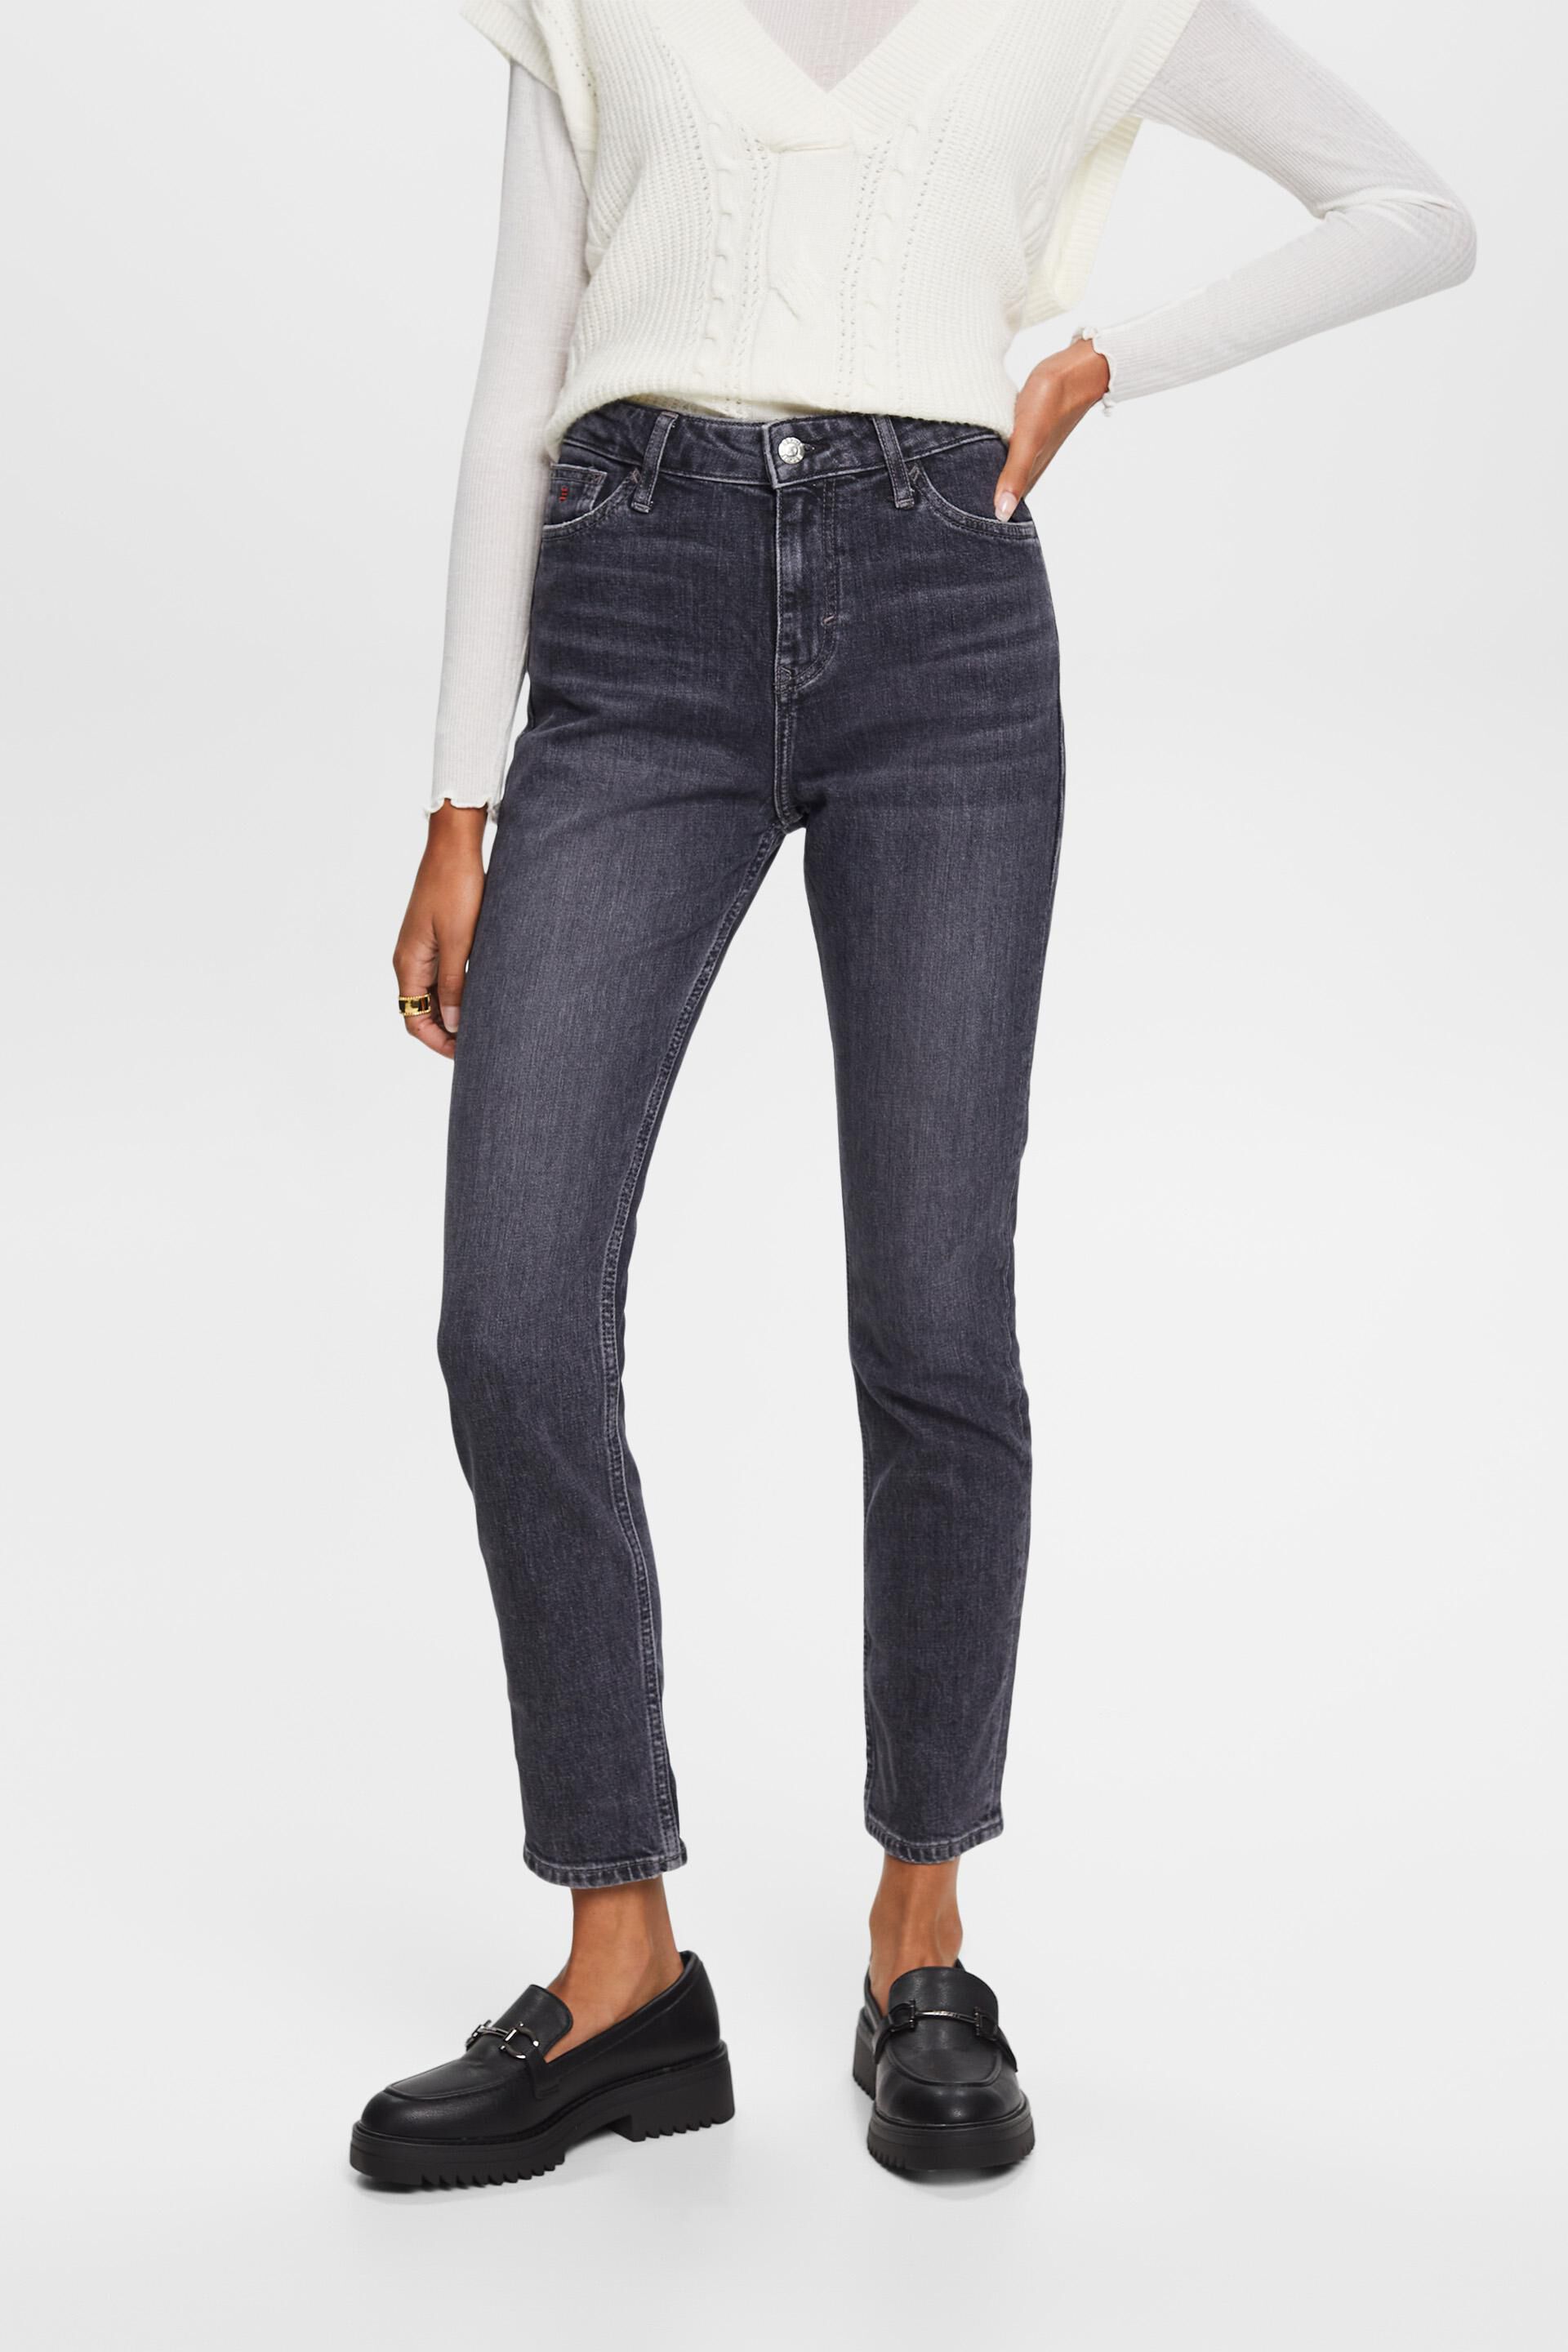 Esprit Damen Premium slim fit stretch jeans